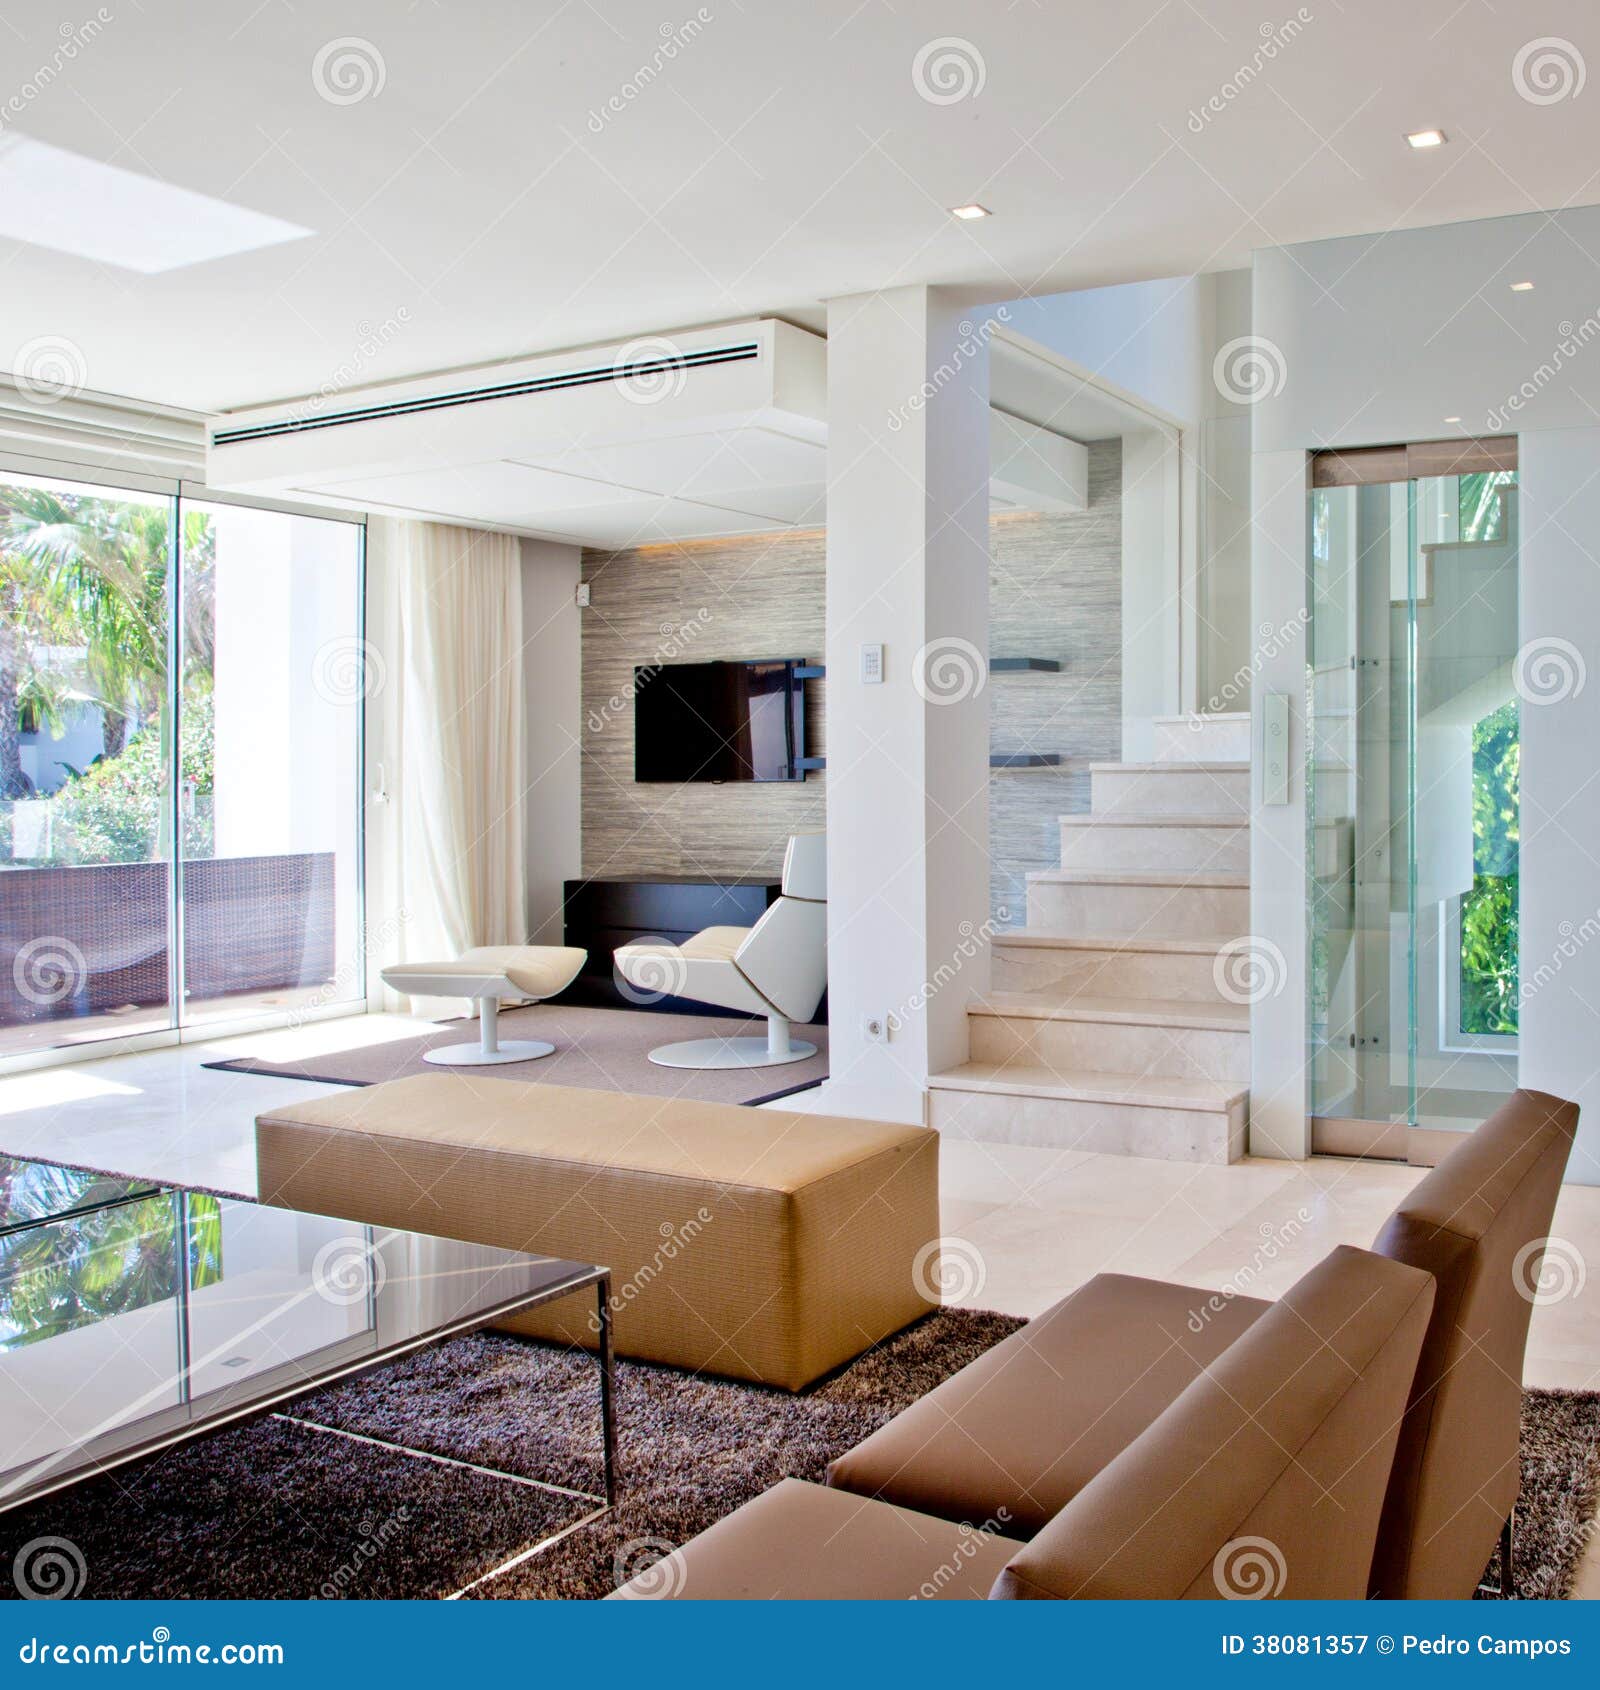 House interior stock image. Image of light, decoration - 38081357